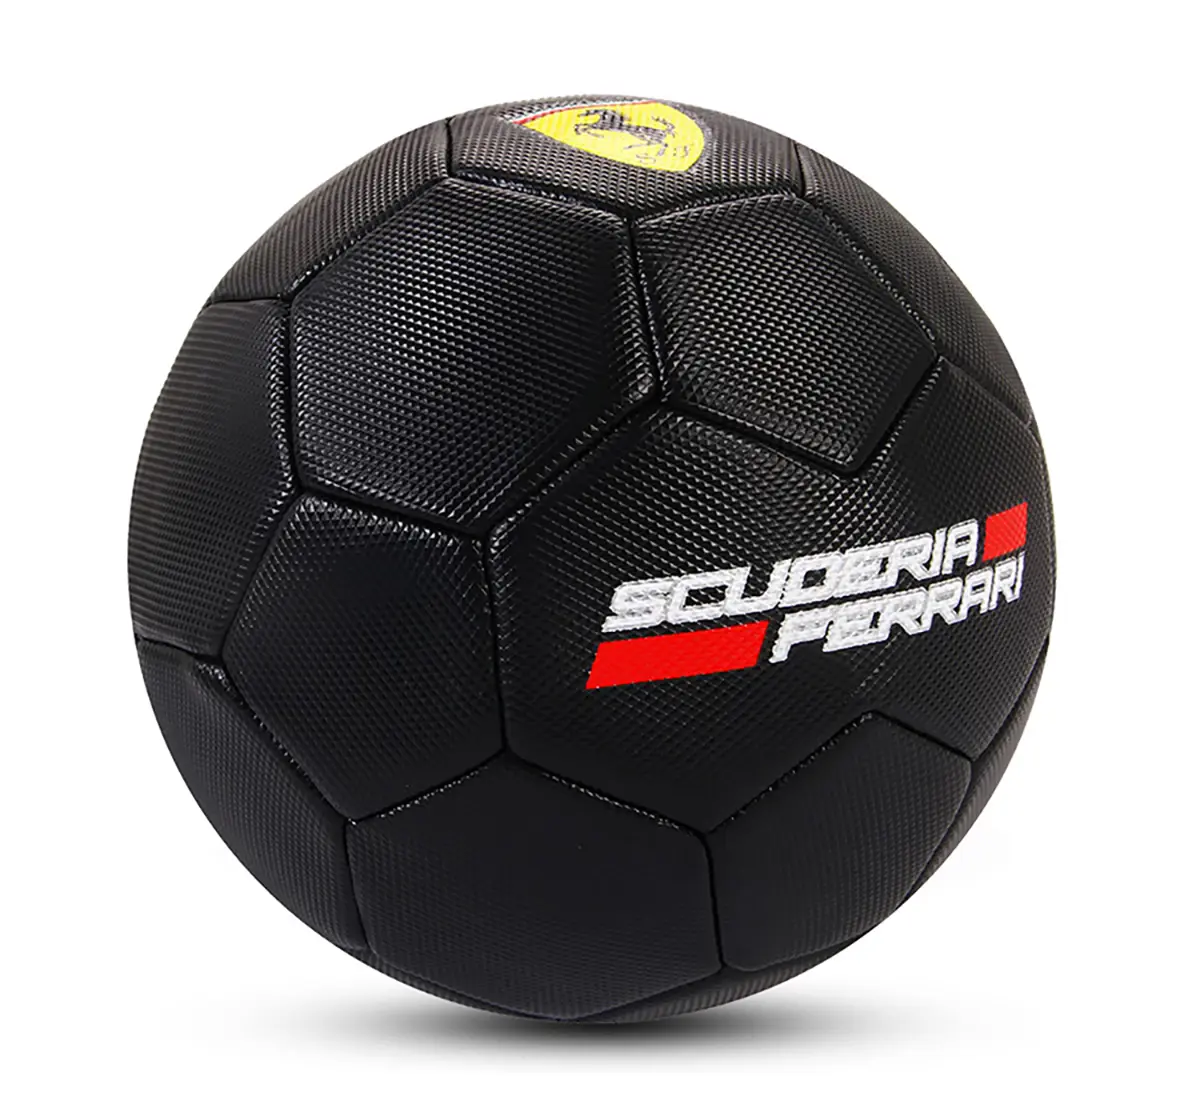 Ferrari Football Size 3 Pvc, Sports & Accessories for Kids age 6Y+ (Black)